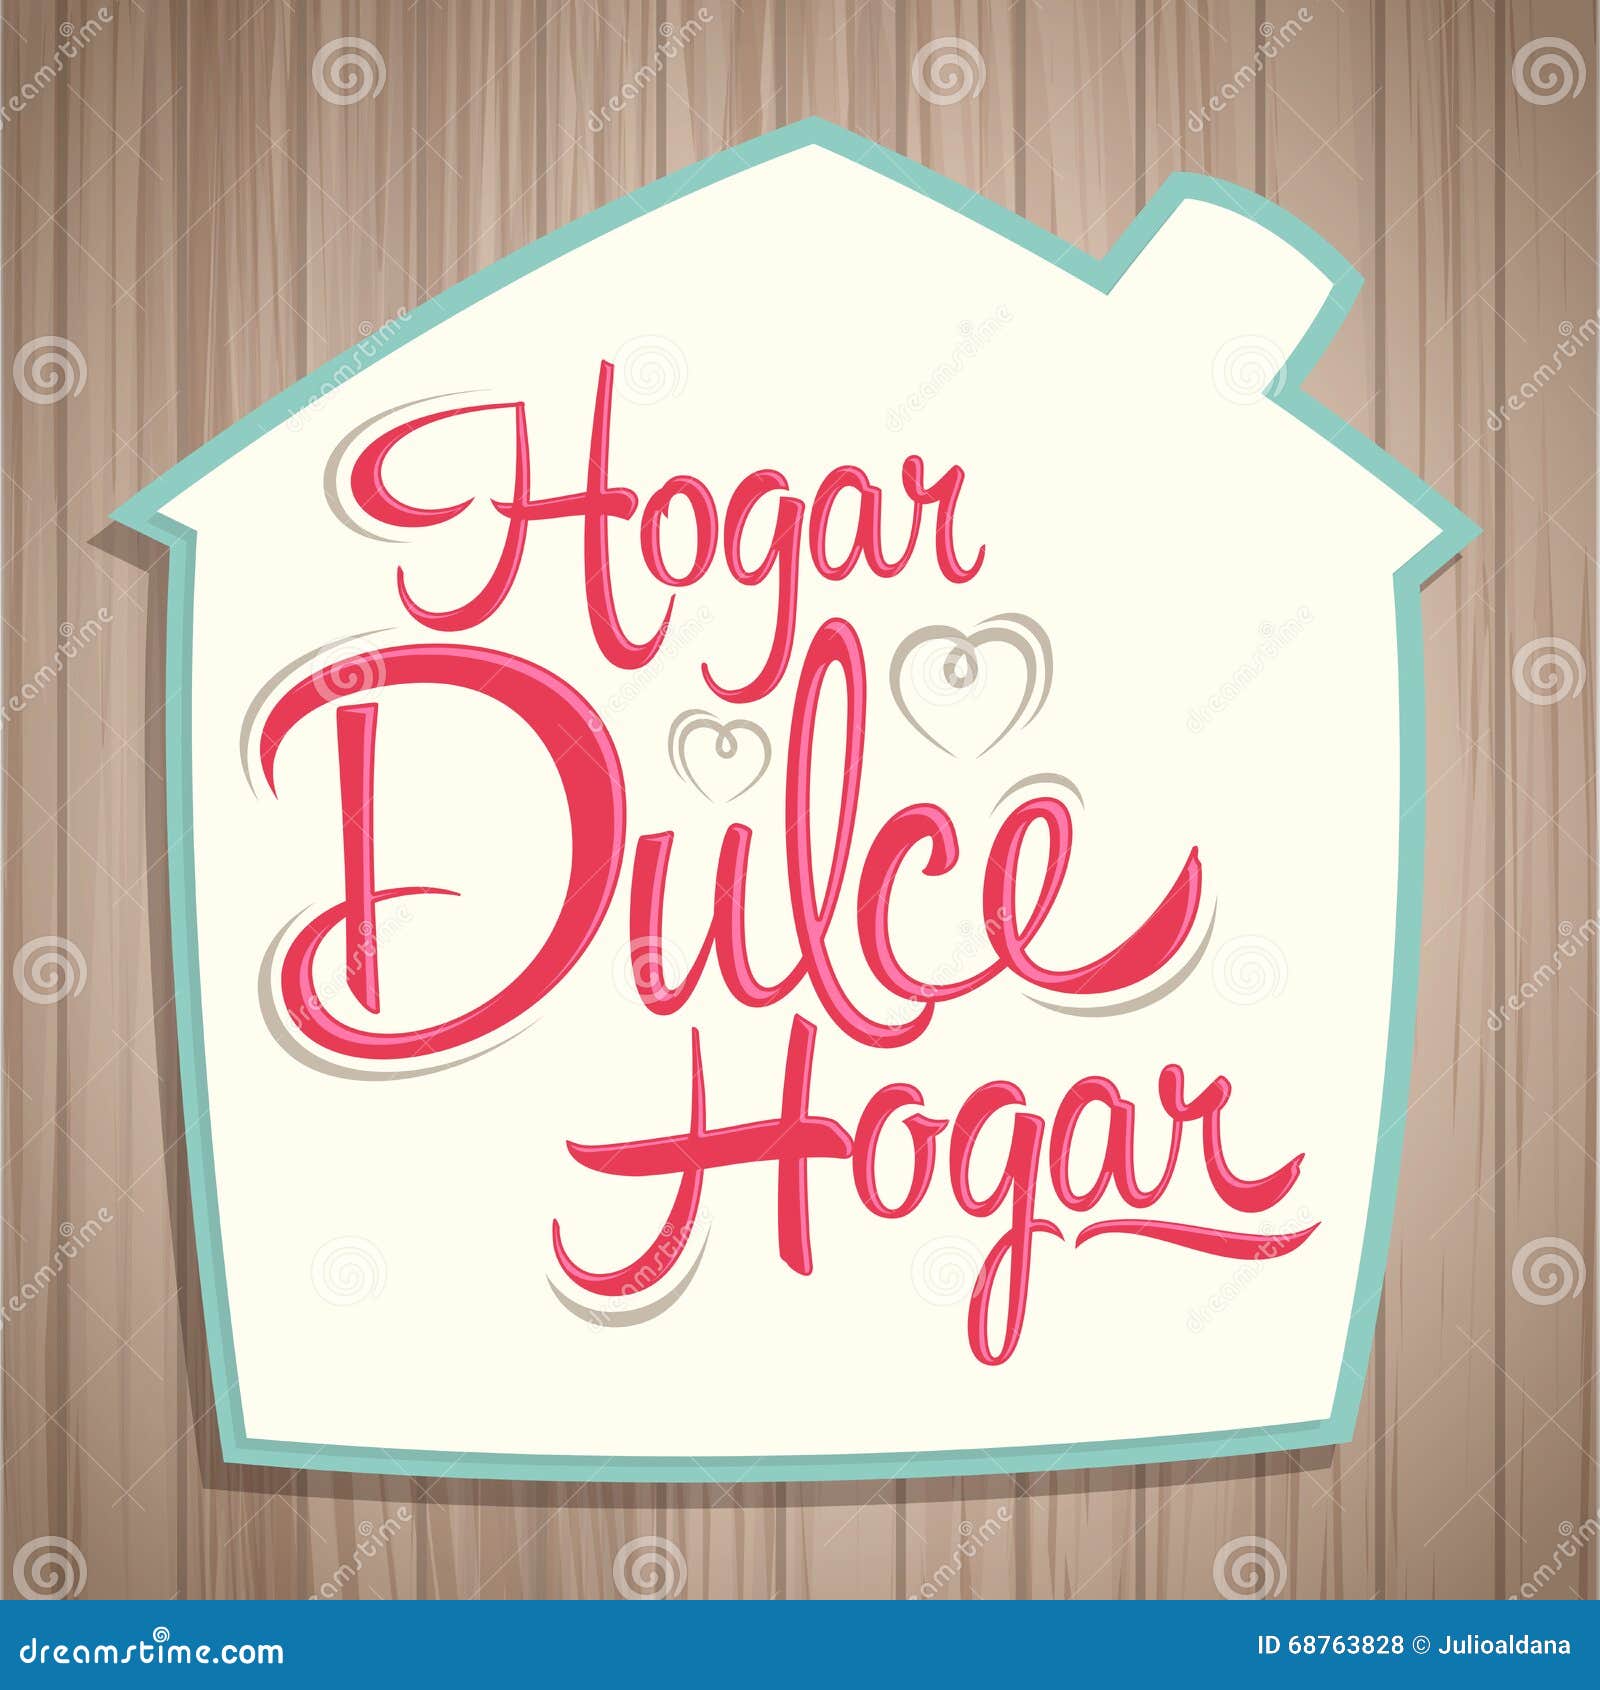 hogar dulce hogar - home sweet home spanish text